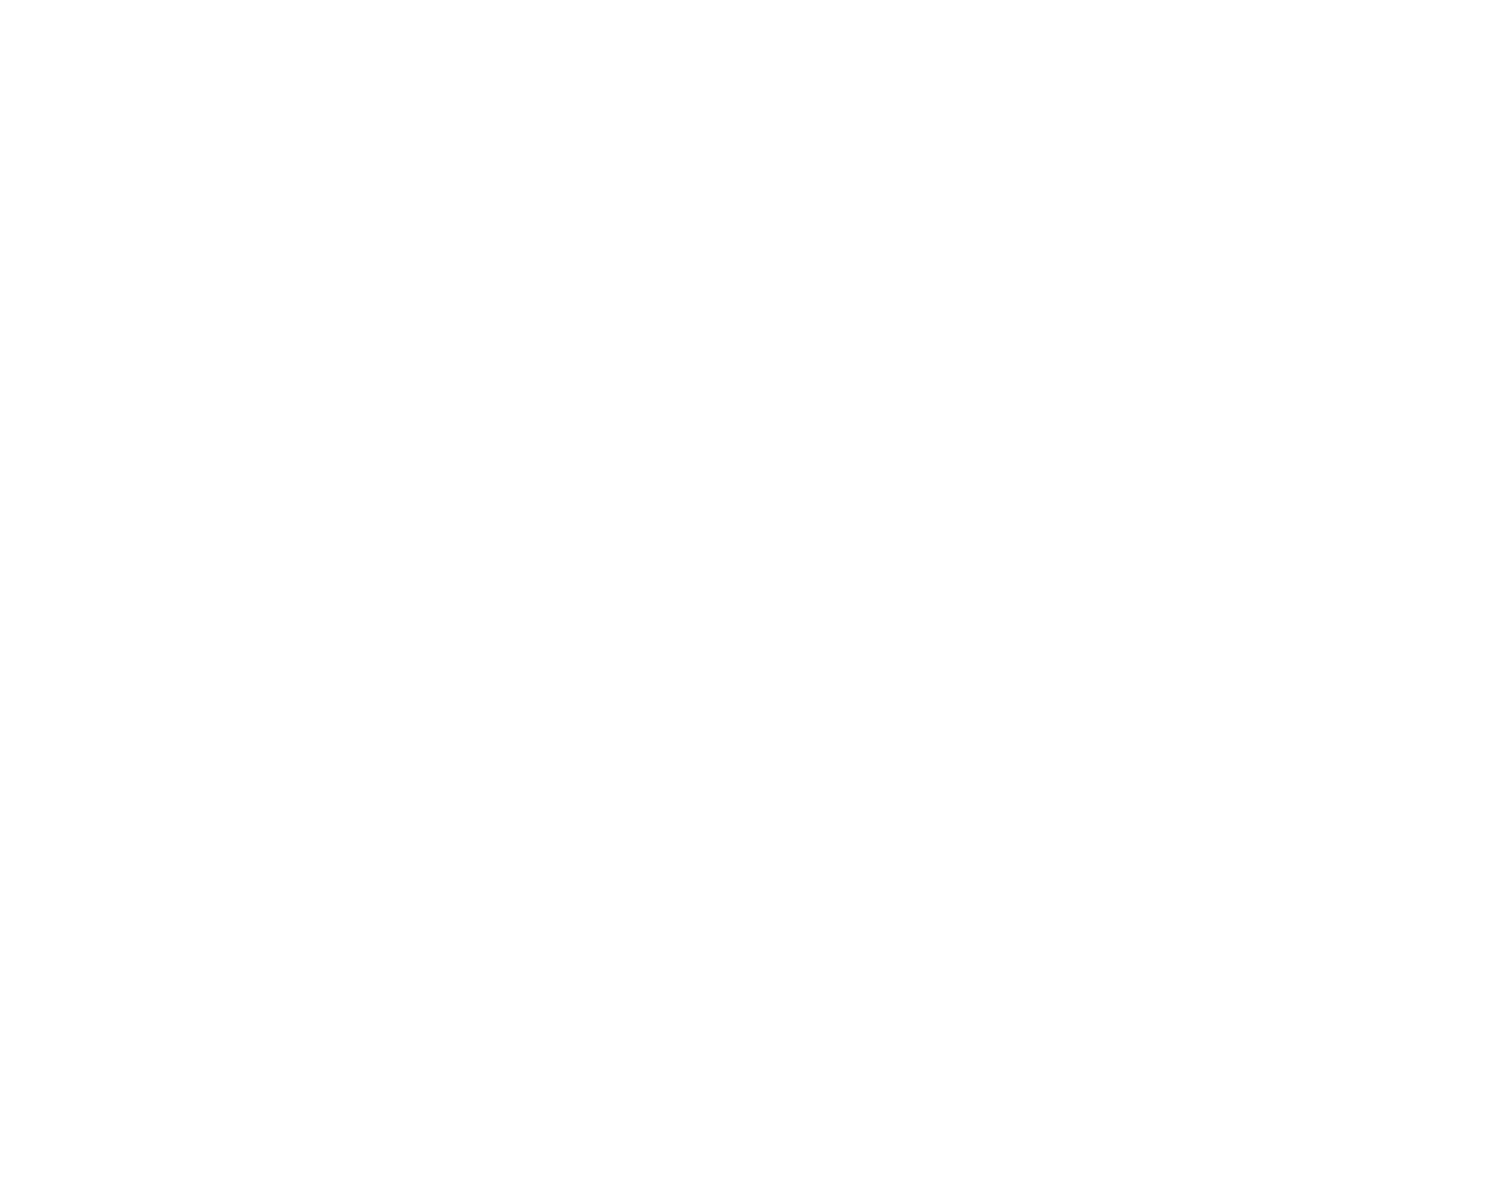 Robison Custom Leather